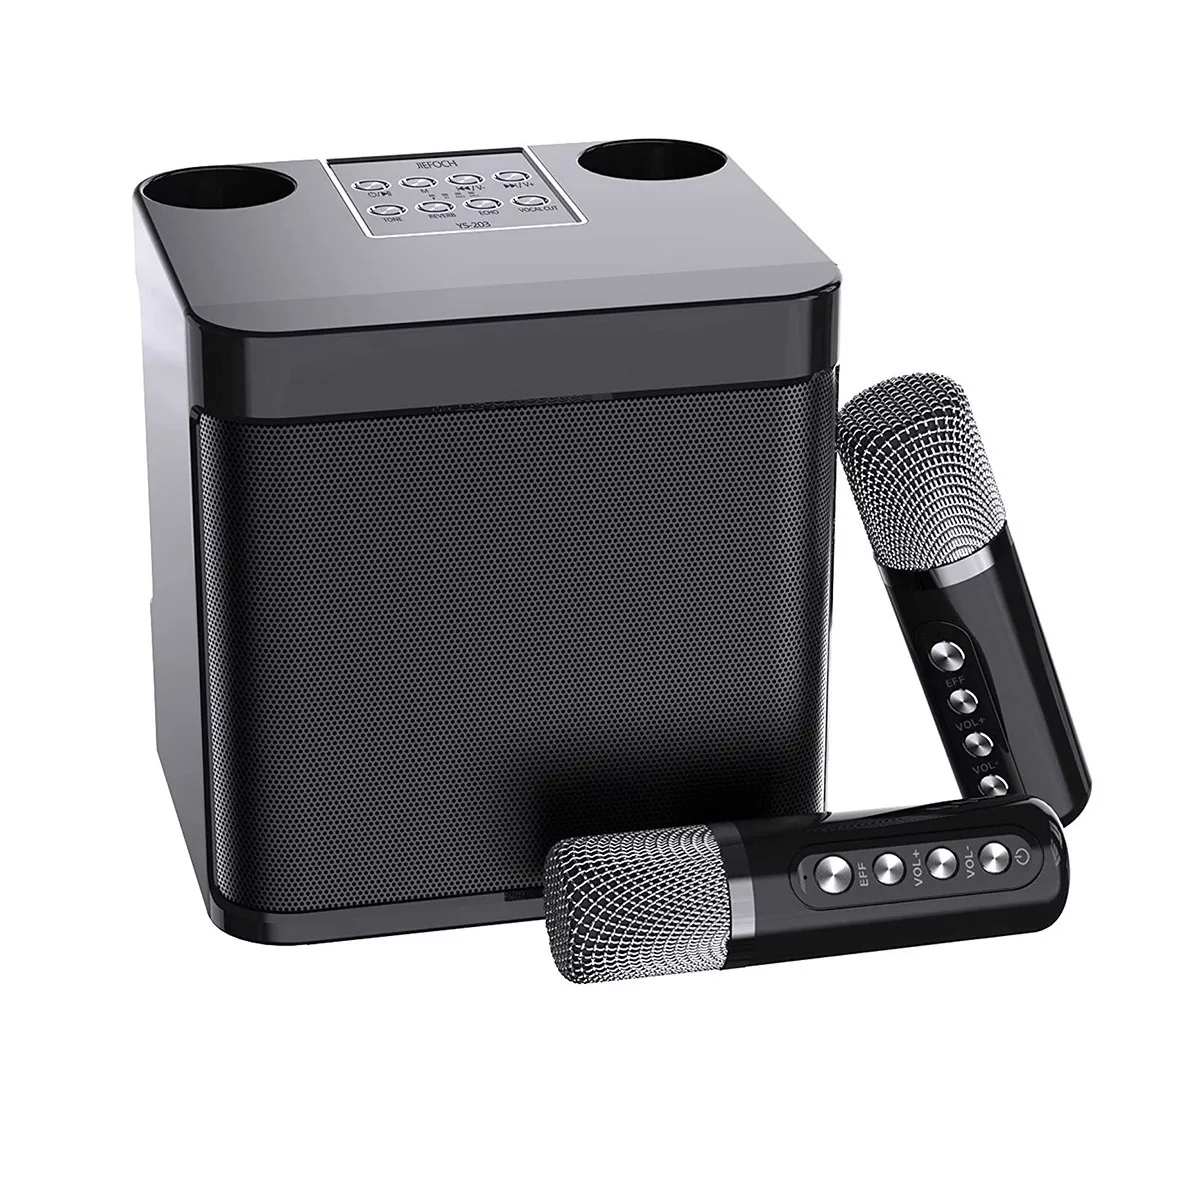 Mini máquina de karaoke con 2 micrófonos inalámbricos, altavoz Bluetoo -  VIRTUAL MUEBLES